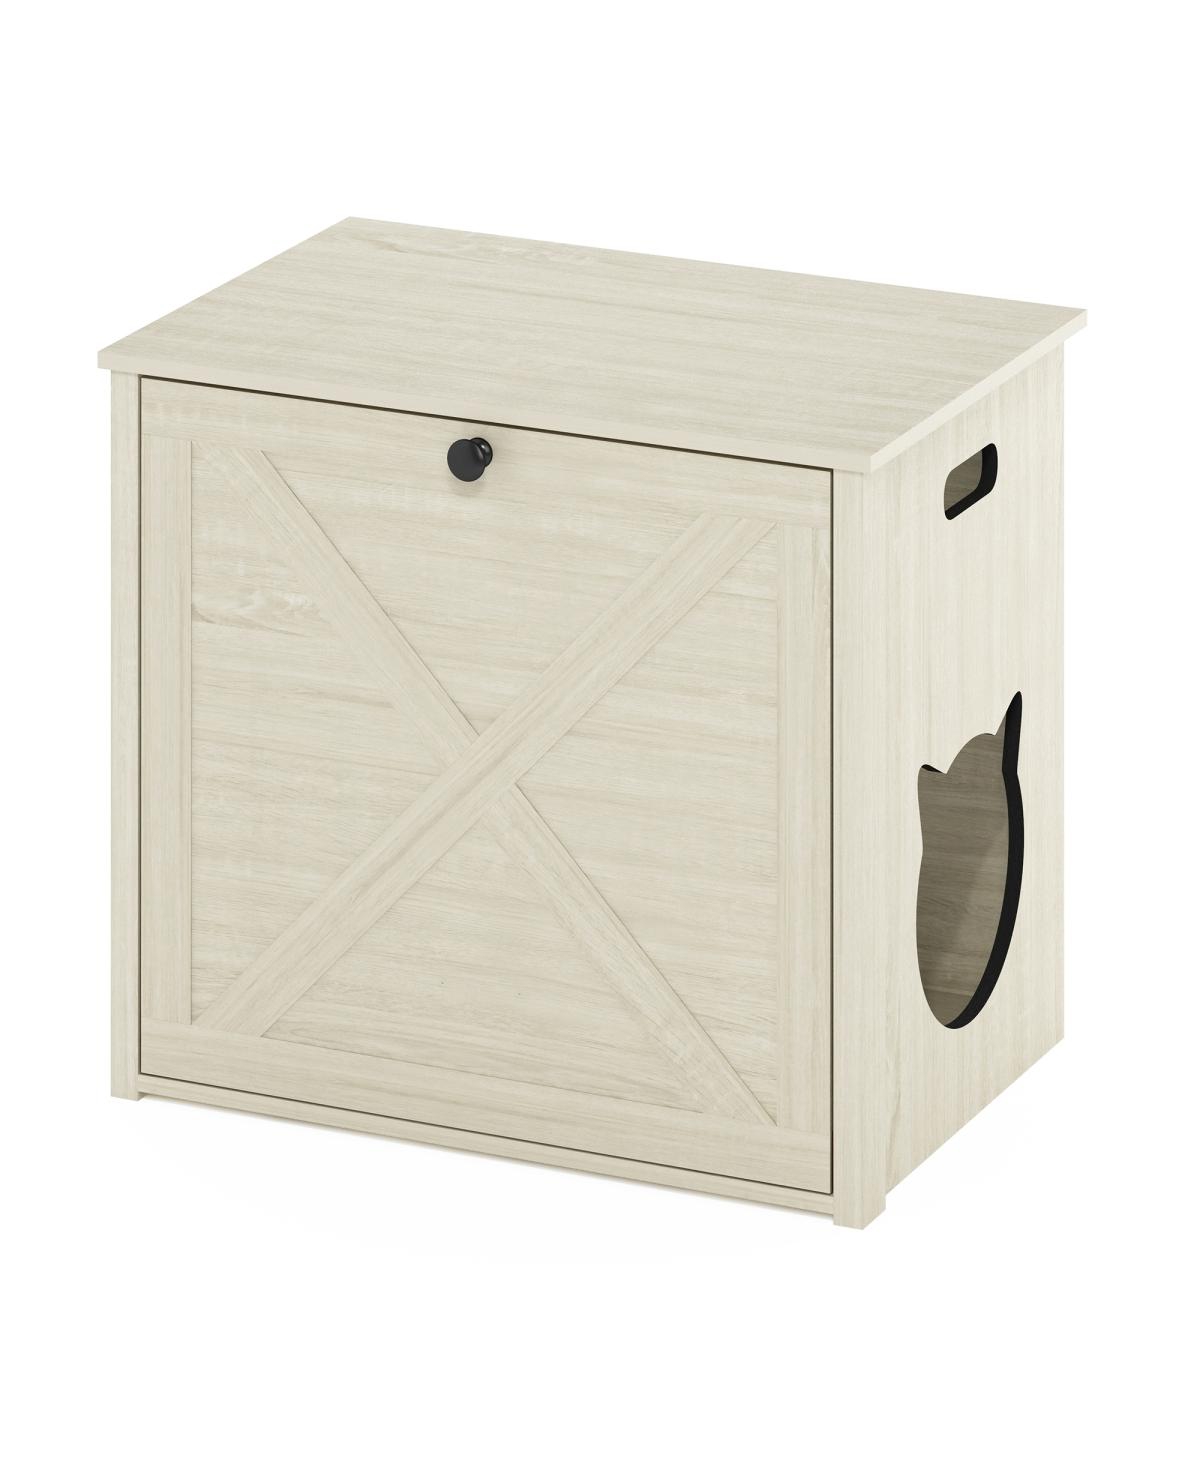 Peli Small Cat Litter Box Enclosure with Single Door, White Wash - White